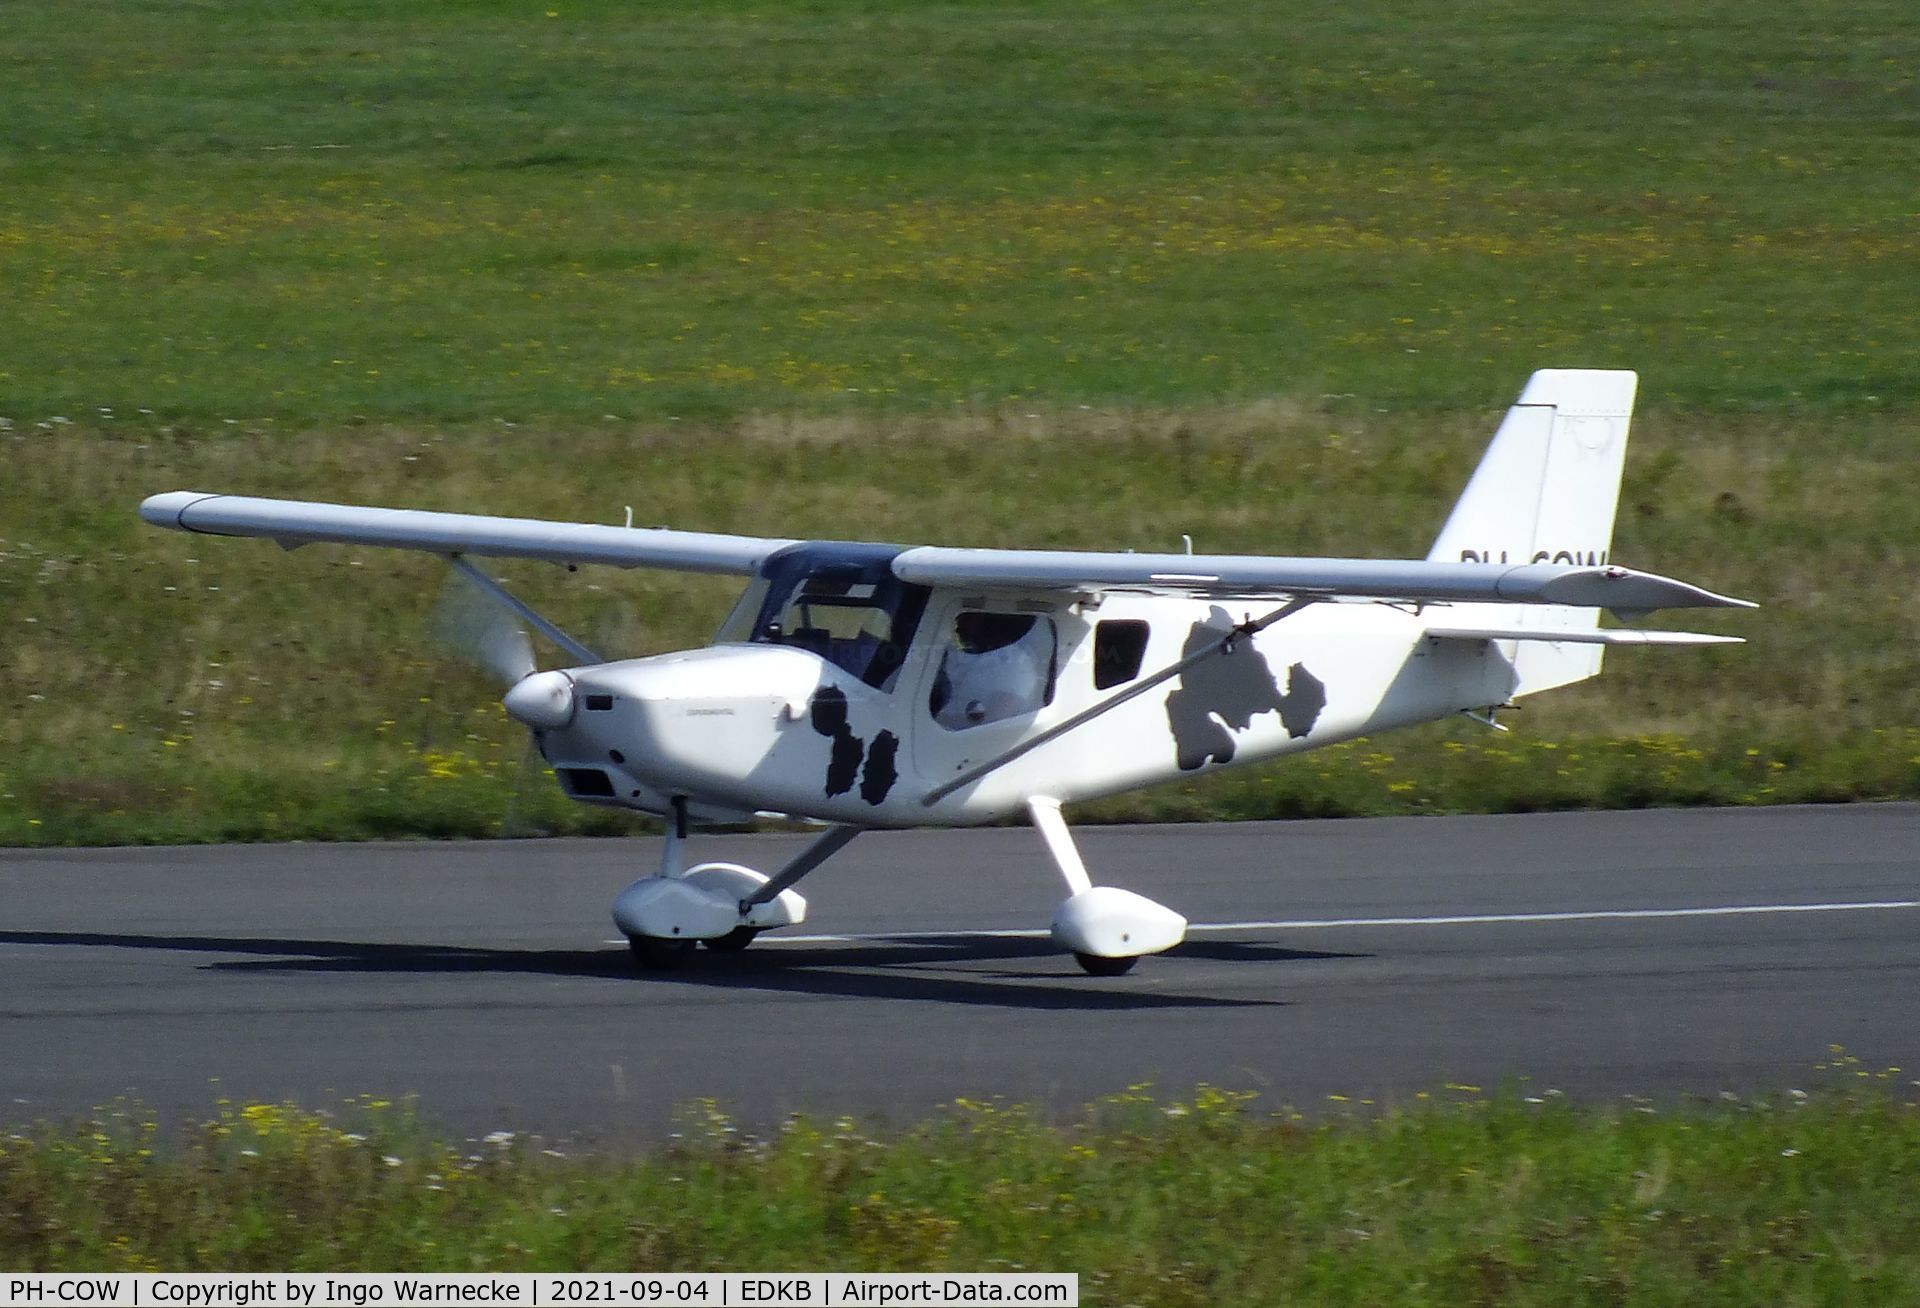 PH-COW, Ultravia Pelican PL C/N 649, Ultravia Pelican PL at Bonn-Hangelar airfield during the Grumman Fly-in 2021